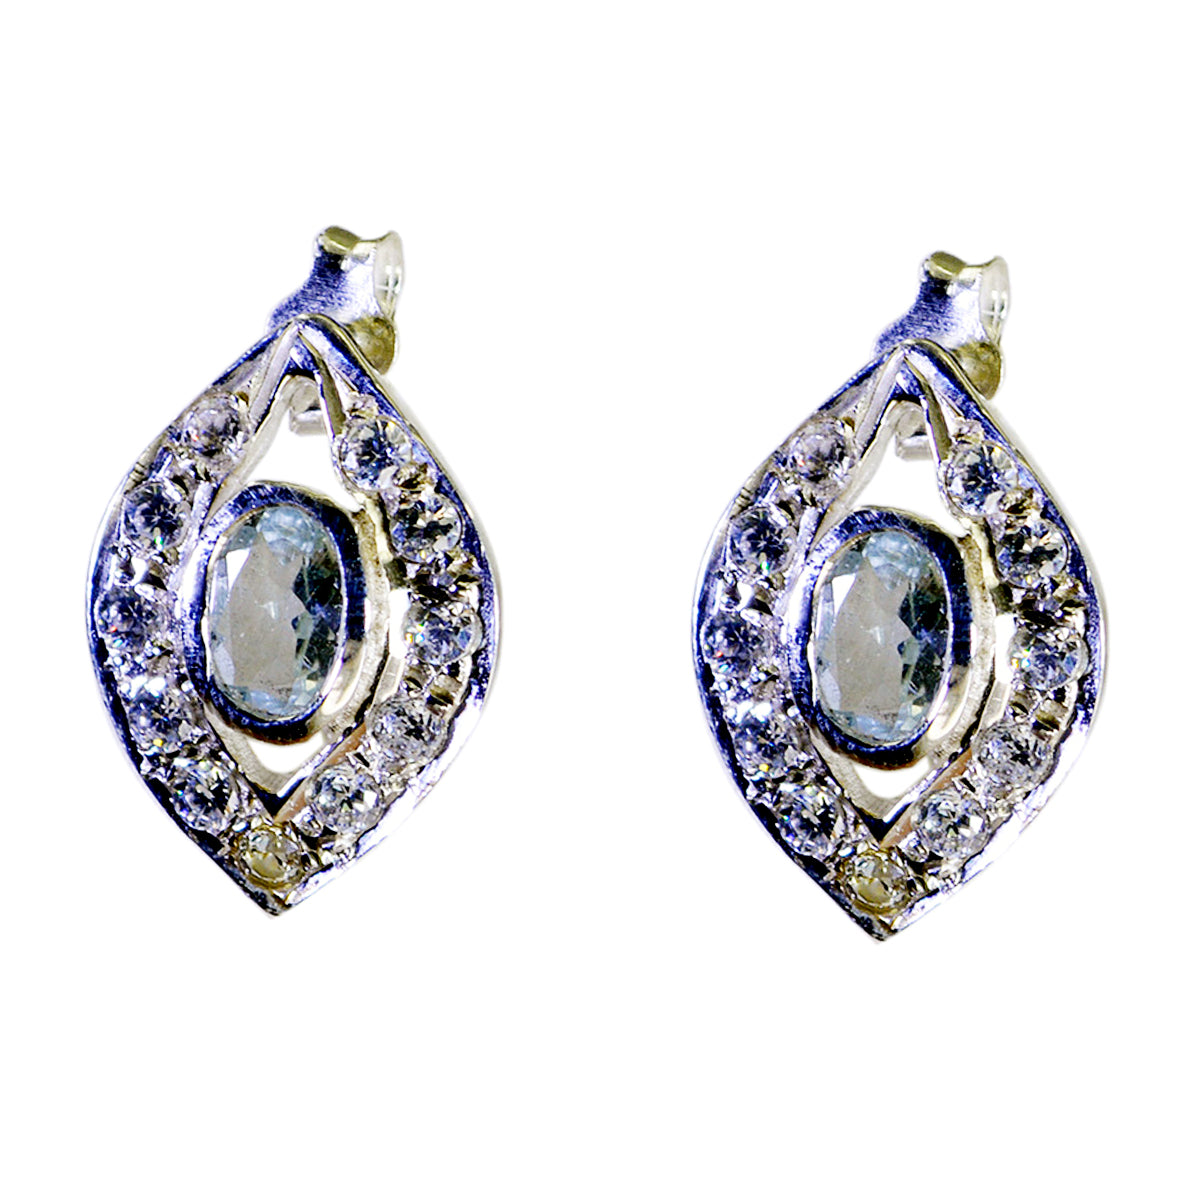 Riyo Good Gemstones round Faceted Blue Topaz Silver Earrings good Friday gift